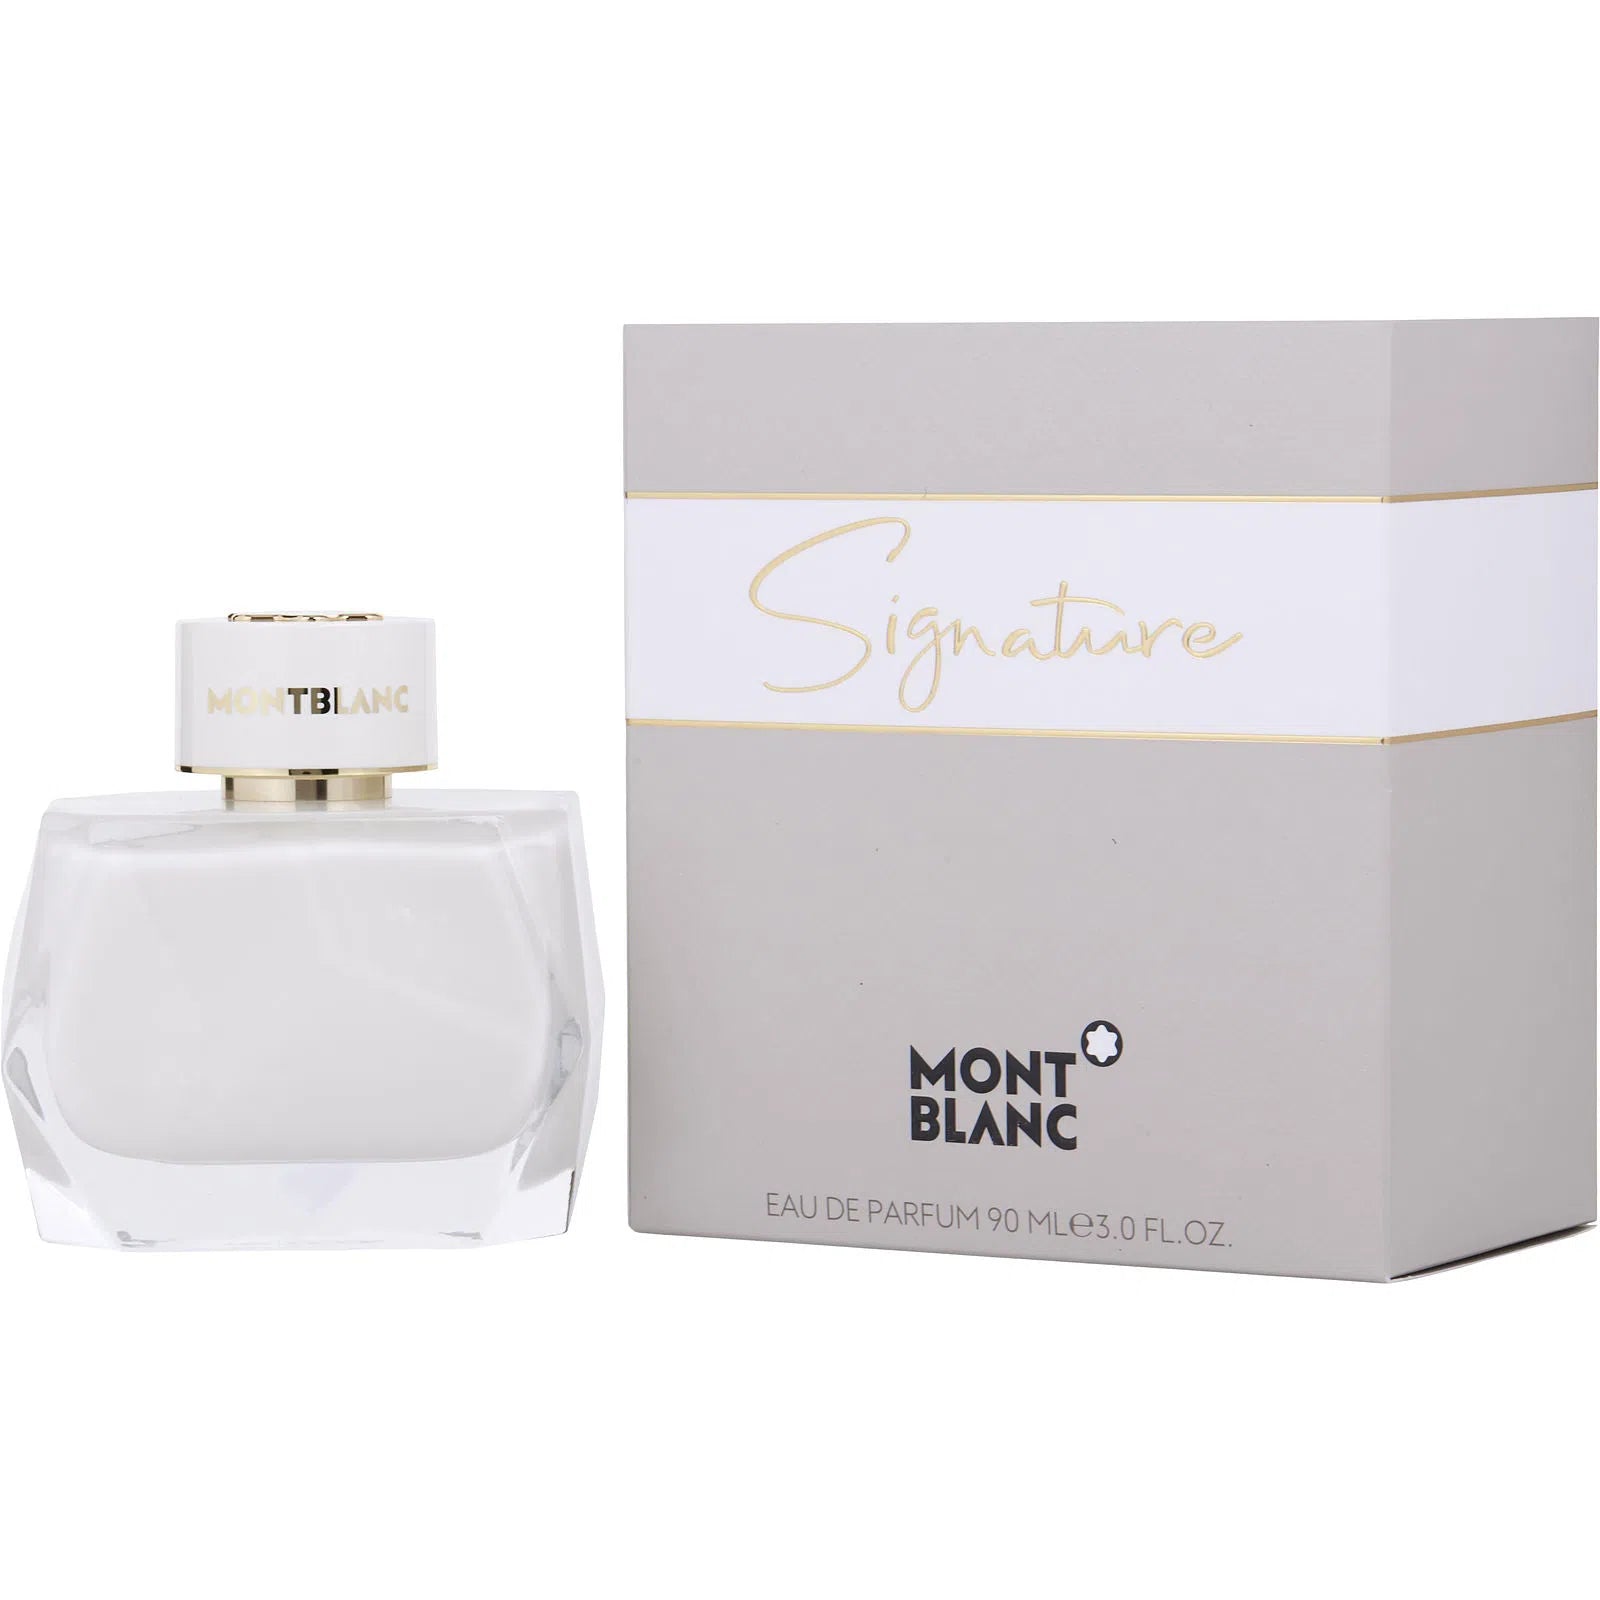 Perfume Mont Blanc Signature EDP (W) / 90 ml - 3386460113588- Prive Perfumes Honduras